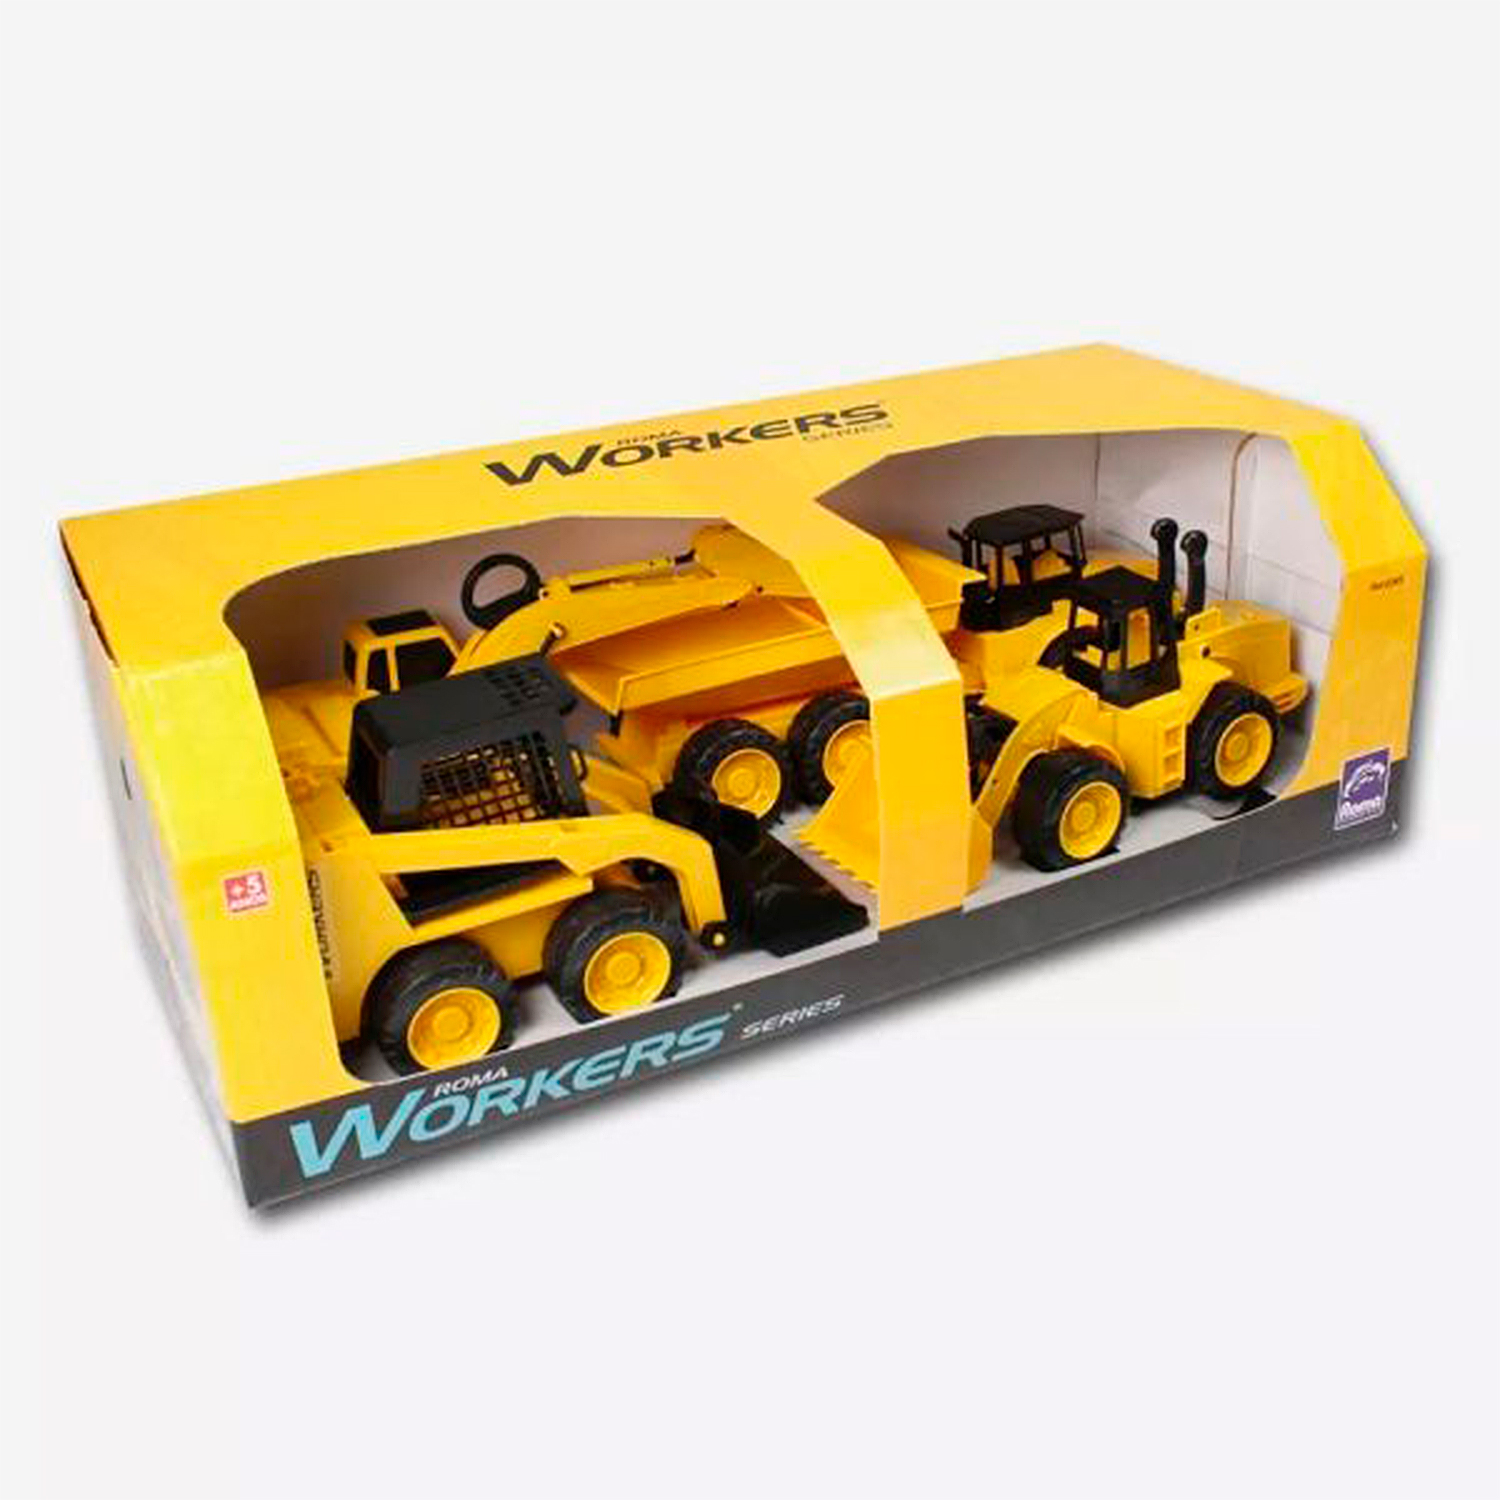 kit-tratores-workers-4-em-1-series-roma-brinquedos_306068_1